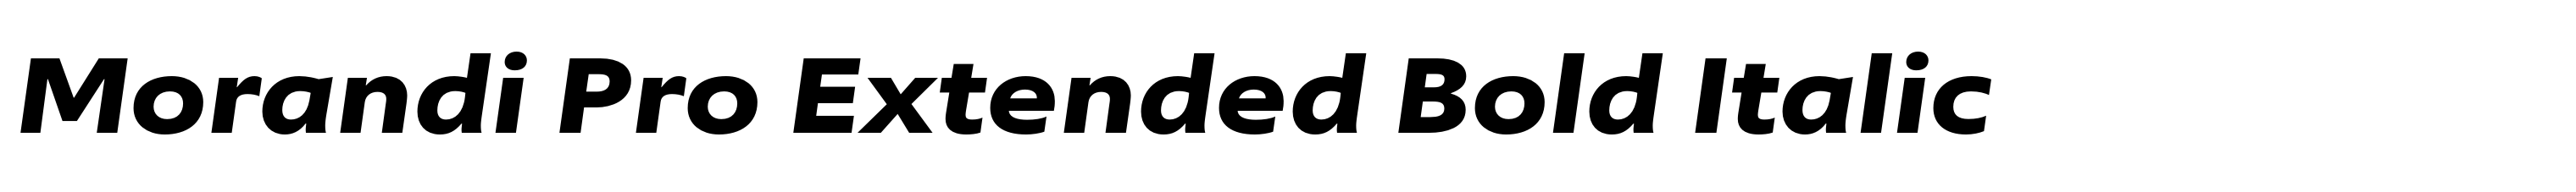 Morandi Pro Extended Bold Italic